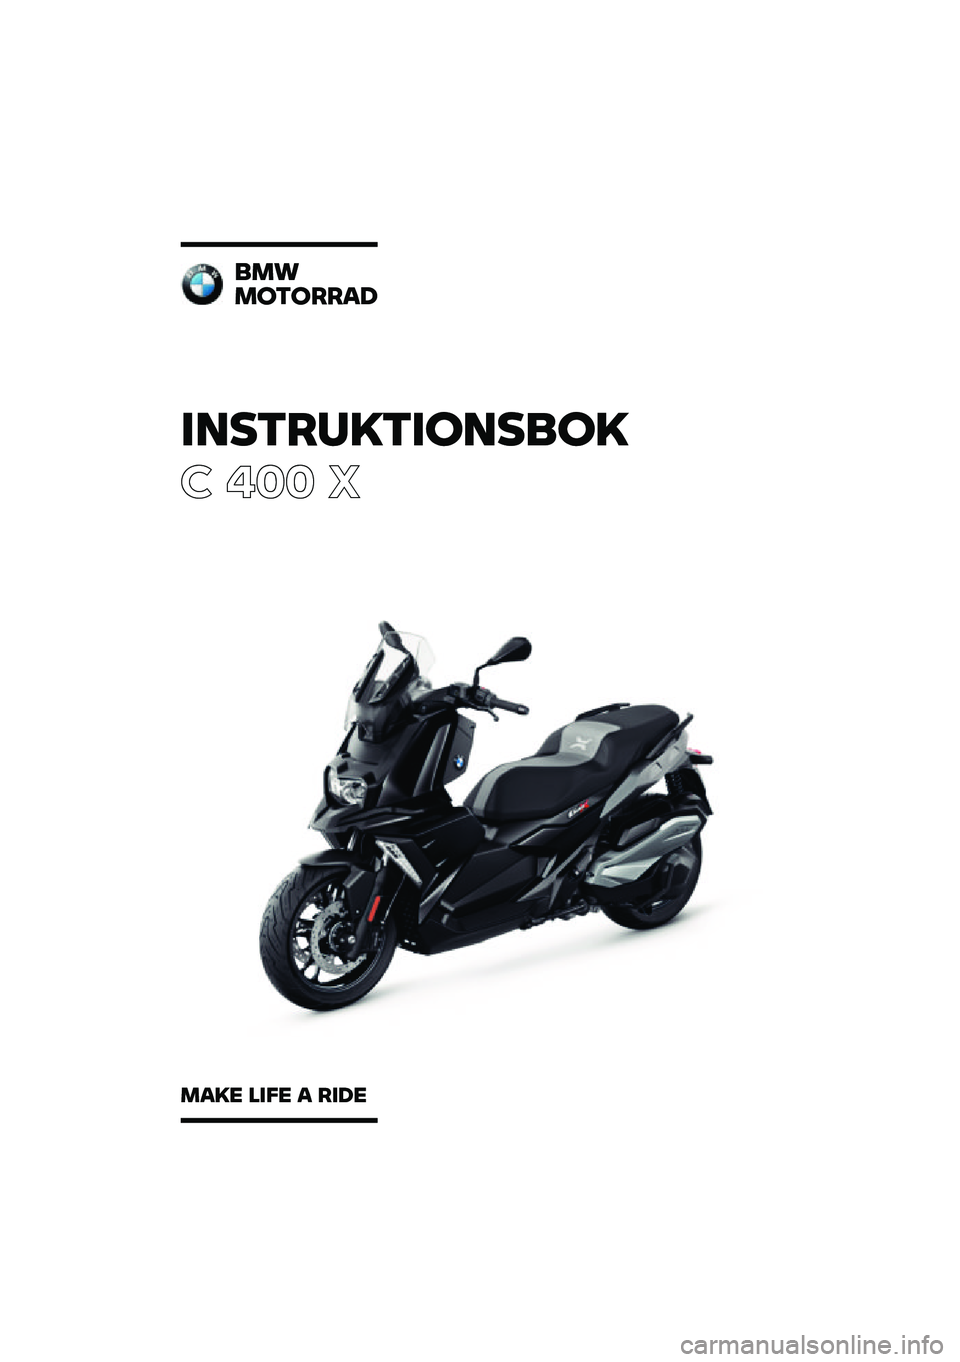 BMW MOTORRAD C 400 X 2020  Instruktionsbok (in Swedish) �������\b���	���
�	�\b
� ��� �
�
��\f
��	��	���
�
��
�\b� ���� �
 ���� 